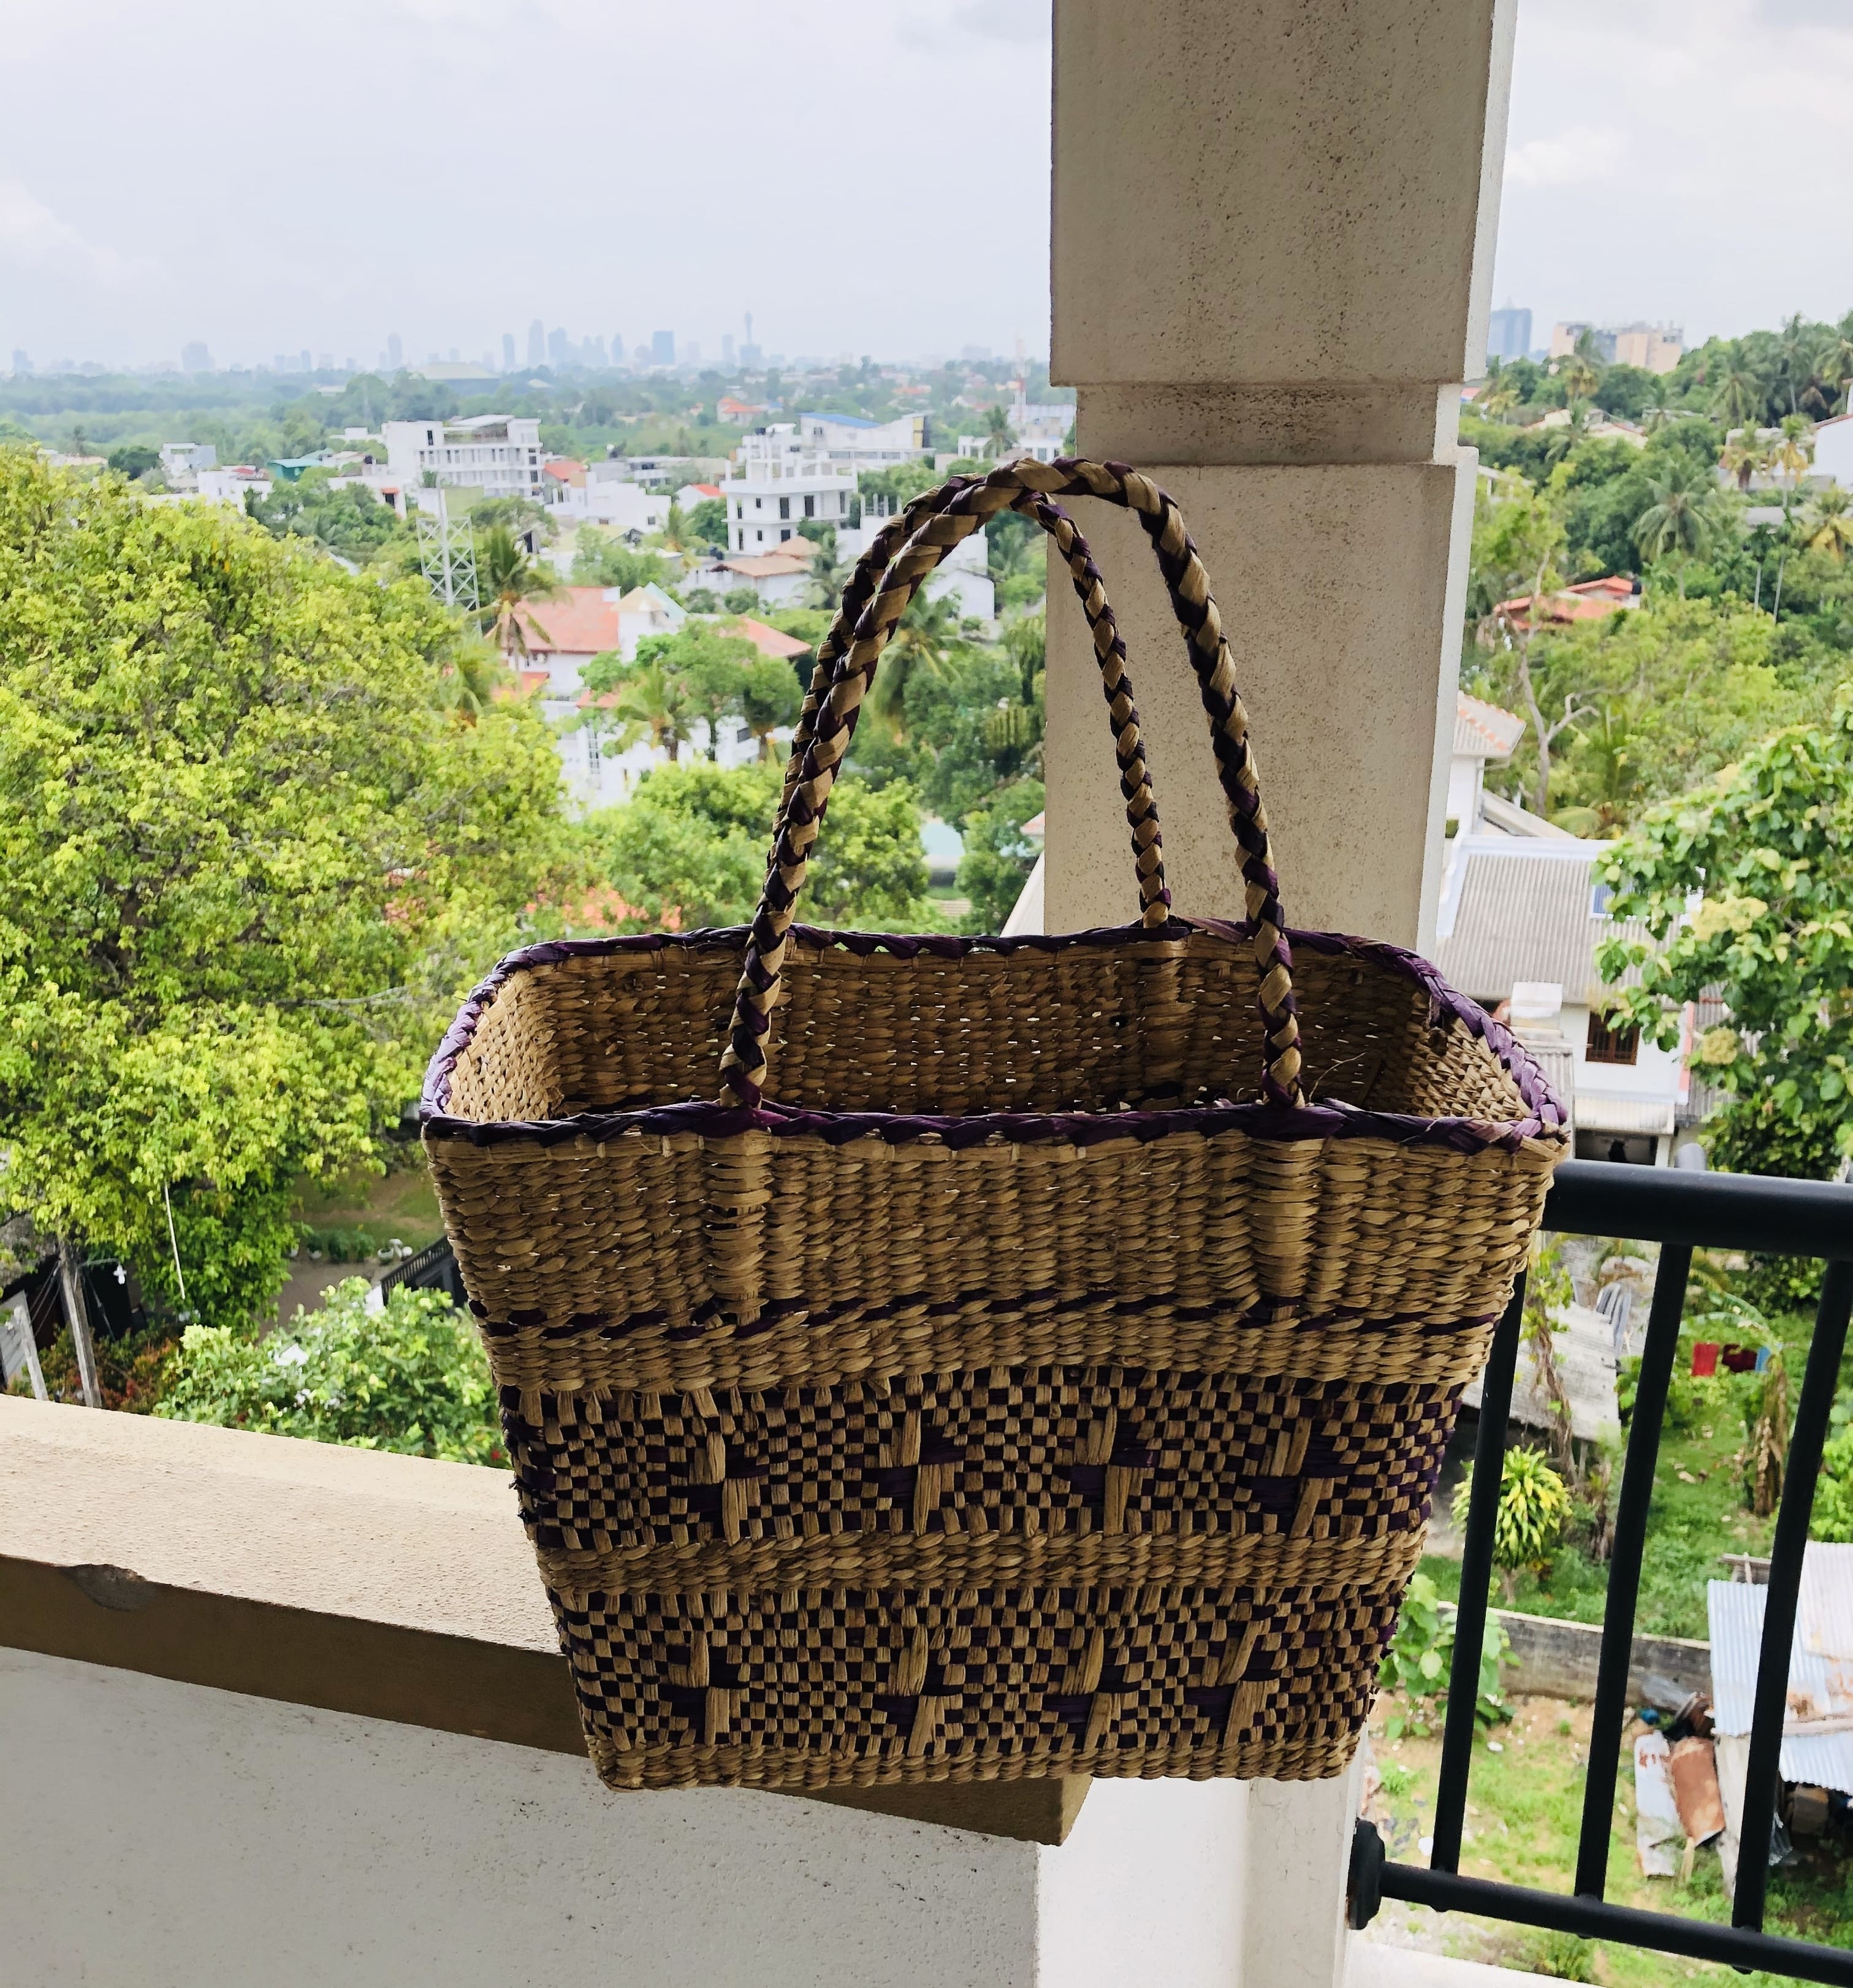 The handmade bag that inspired Shari on her trip